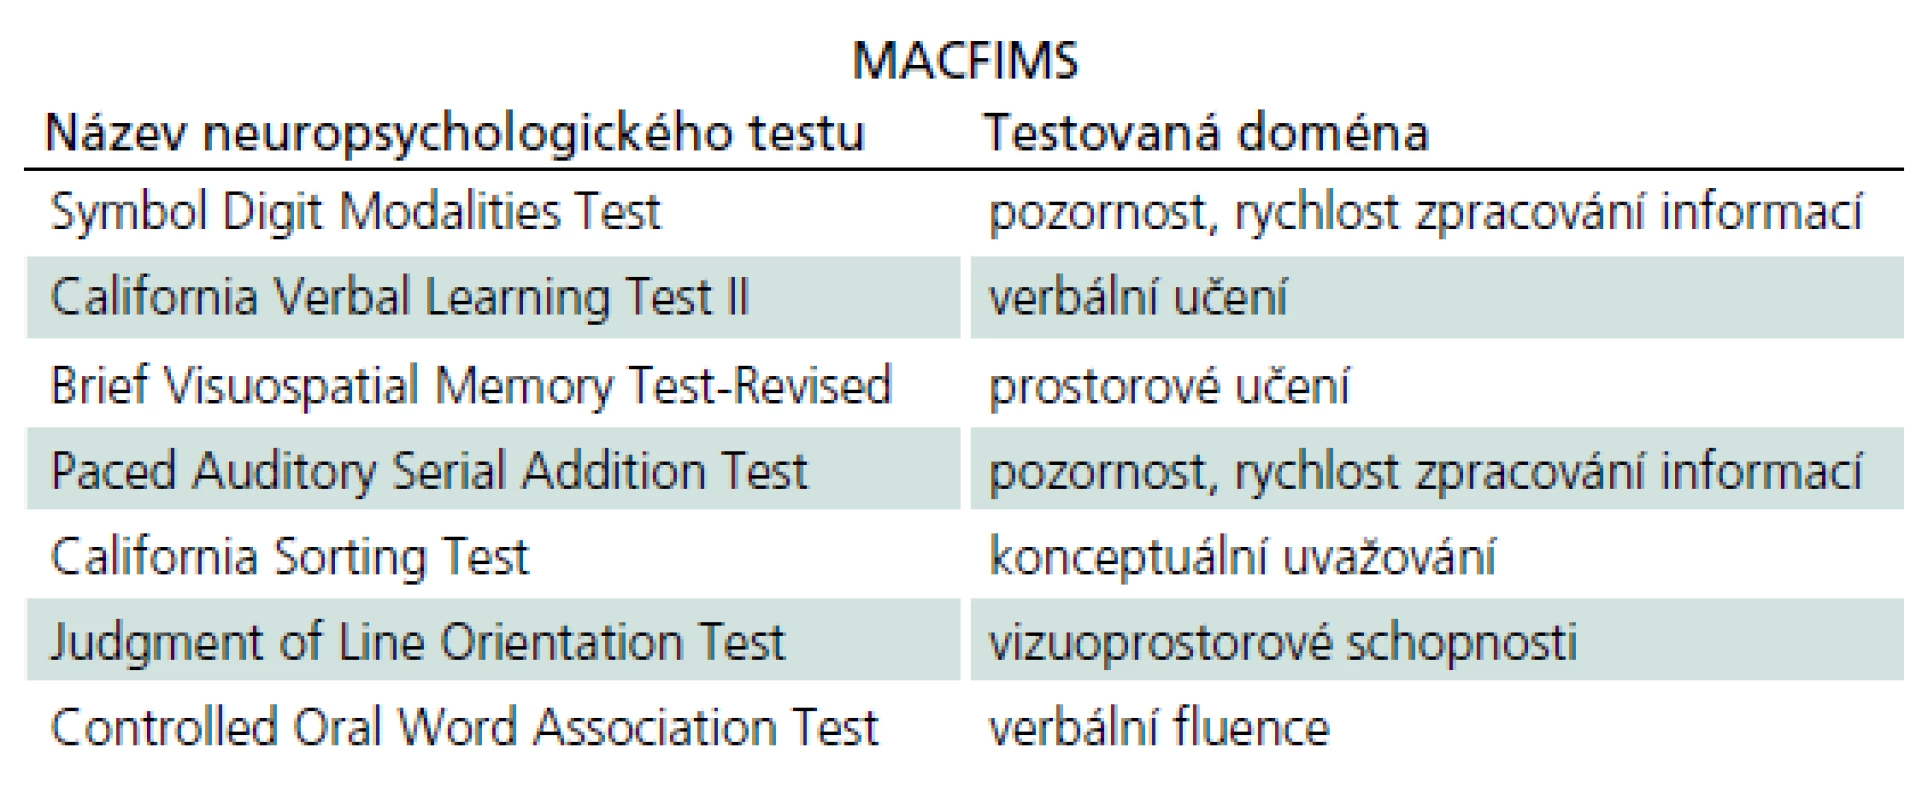 Testová baterie Minimal Assessment of Cognitive Function in Multiple Sclerosis (MACFIMS).